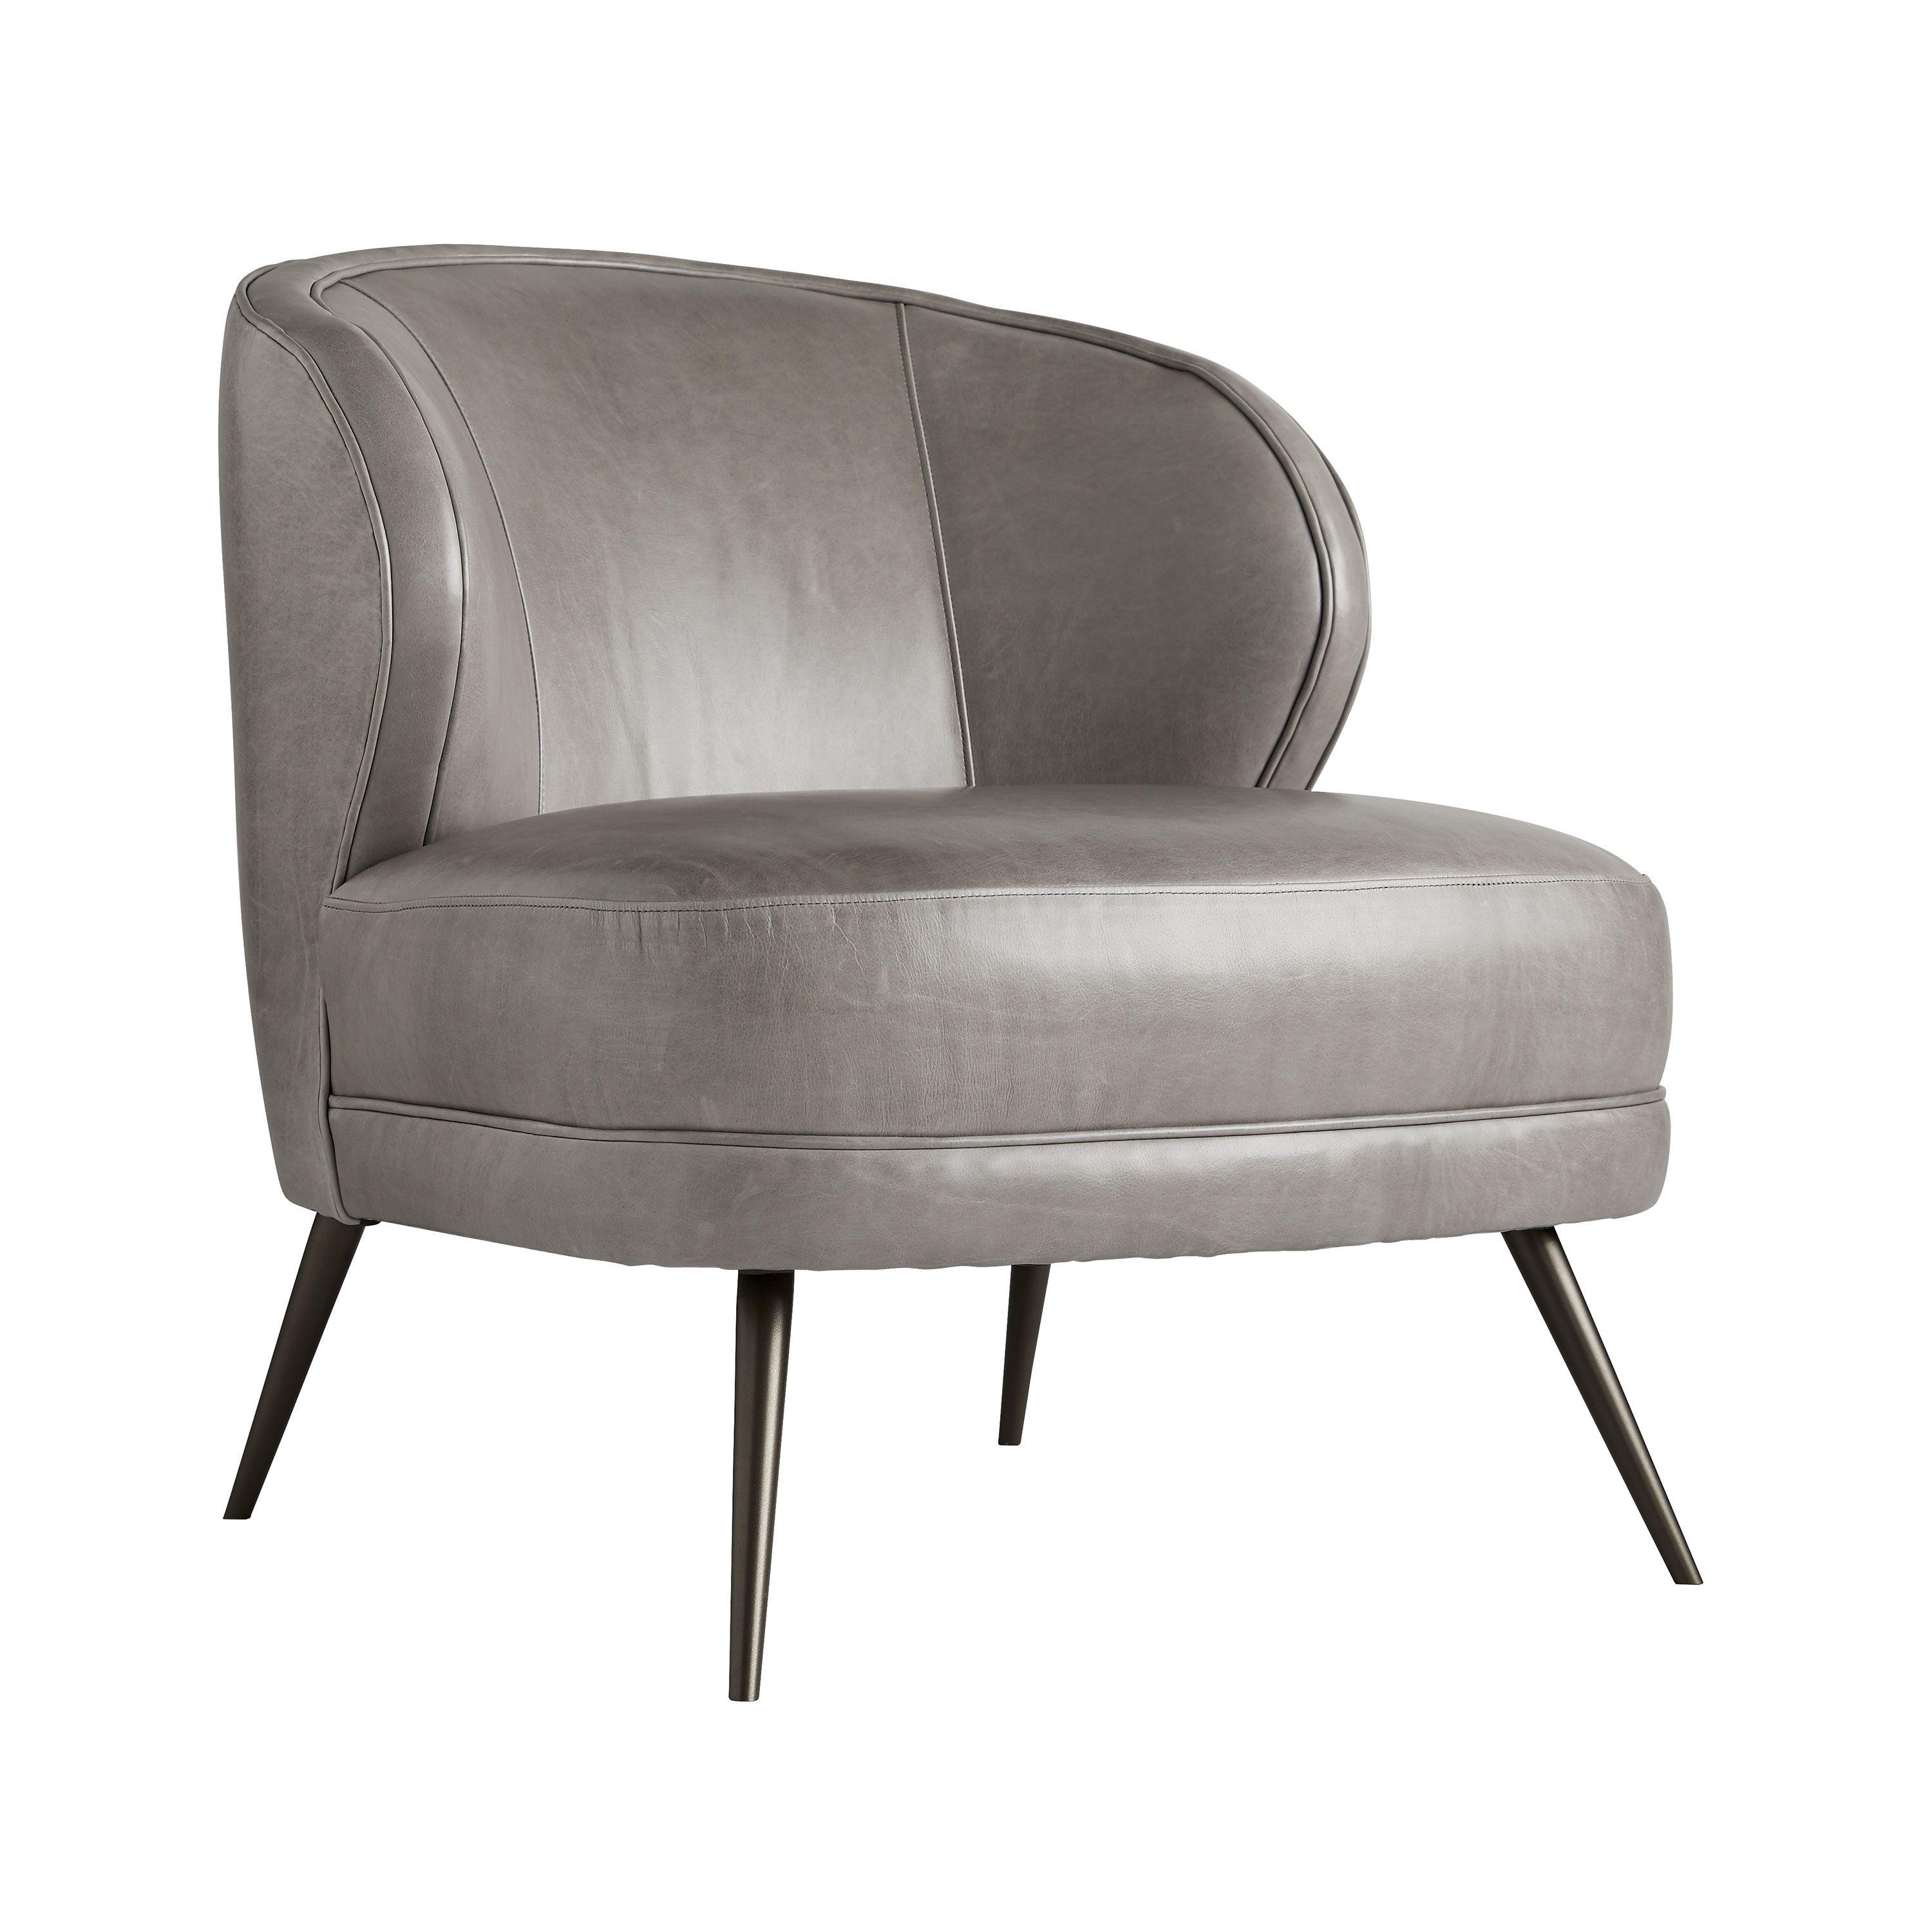 Купить Кресло Kitts Chair Mineral Grey Leather в интернет-магазине roooms.ru